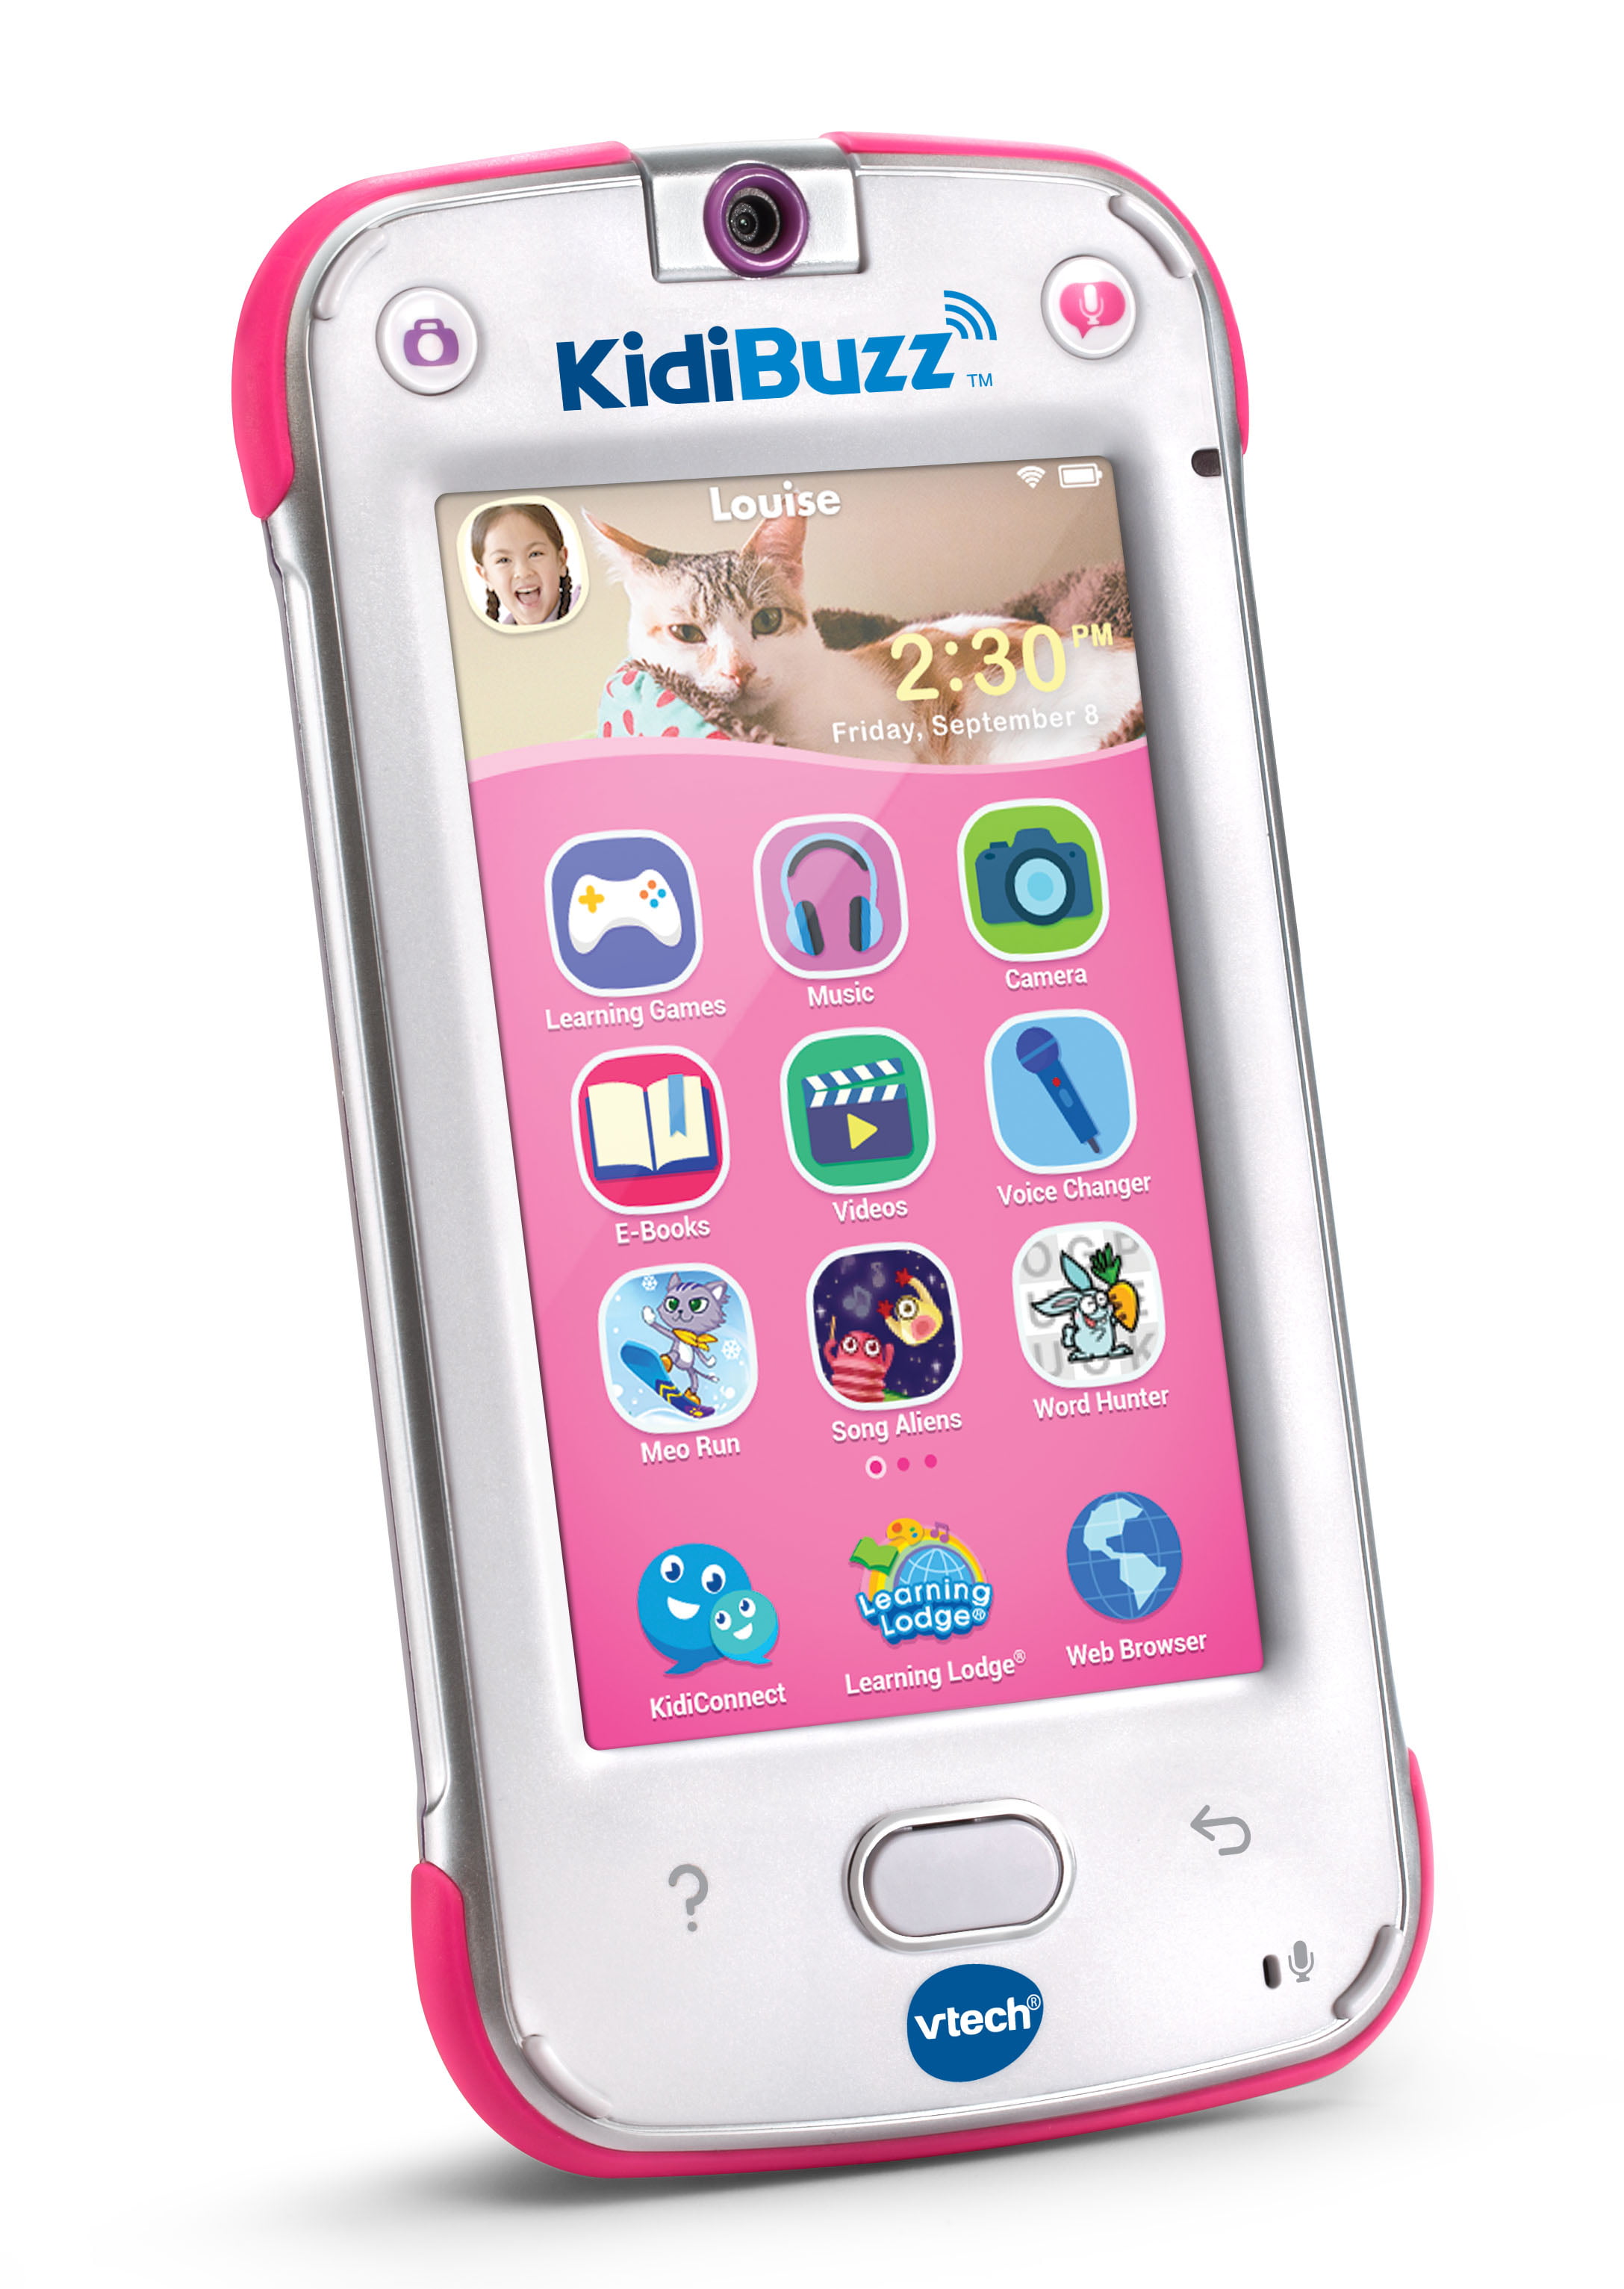 VTech Kidibuzz Handheld Smart Device for Kids Pink Brand New/Factory Sealed 